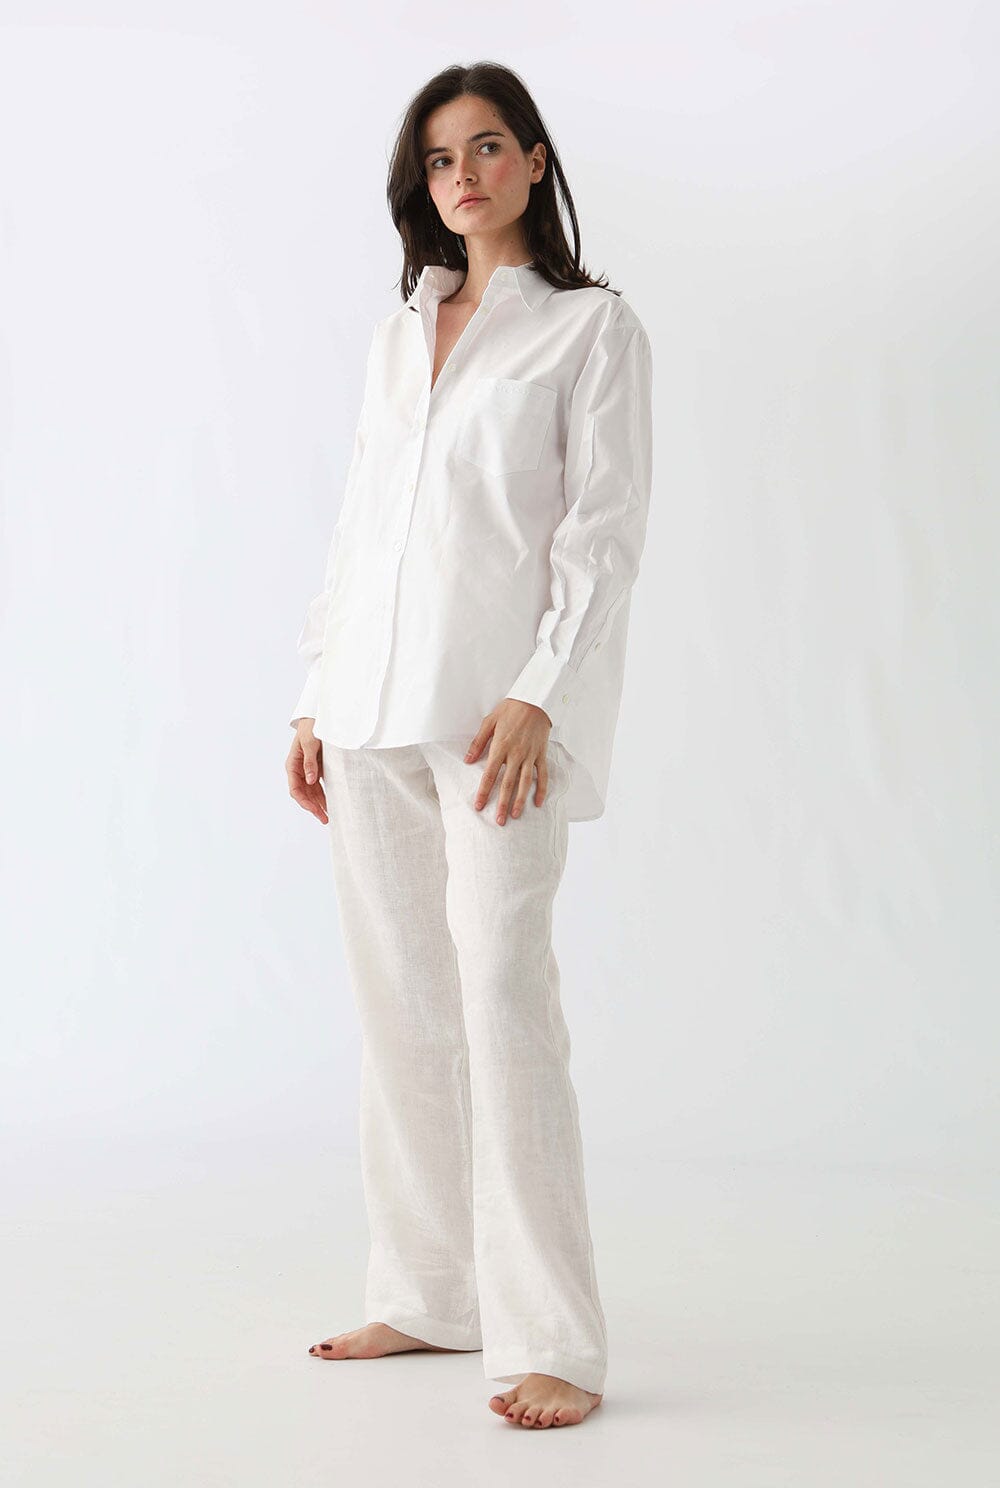 OXFORD SHIRT: WHITE Shirts & blouses The Villã Concept 